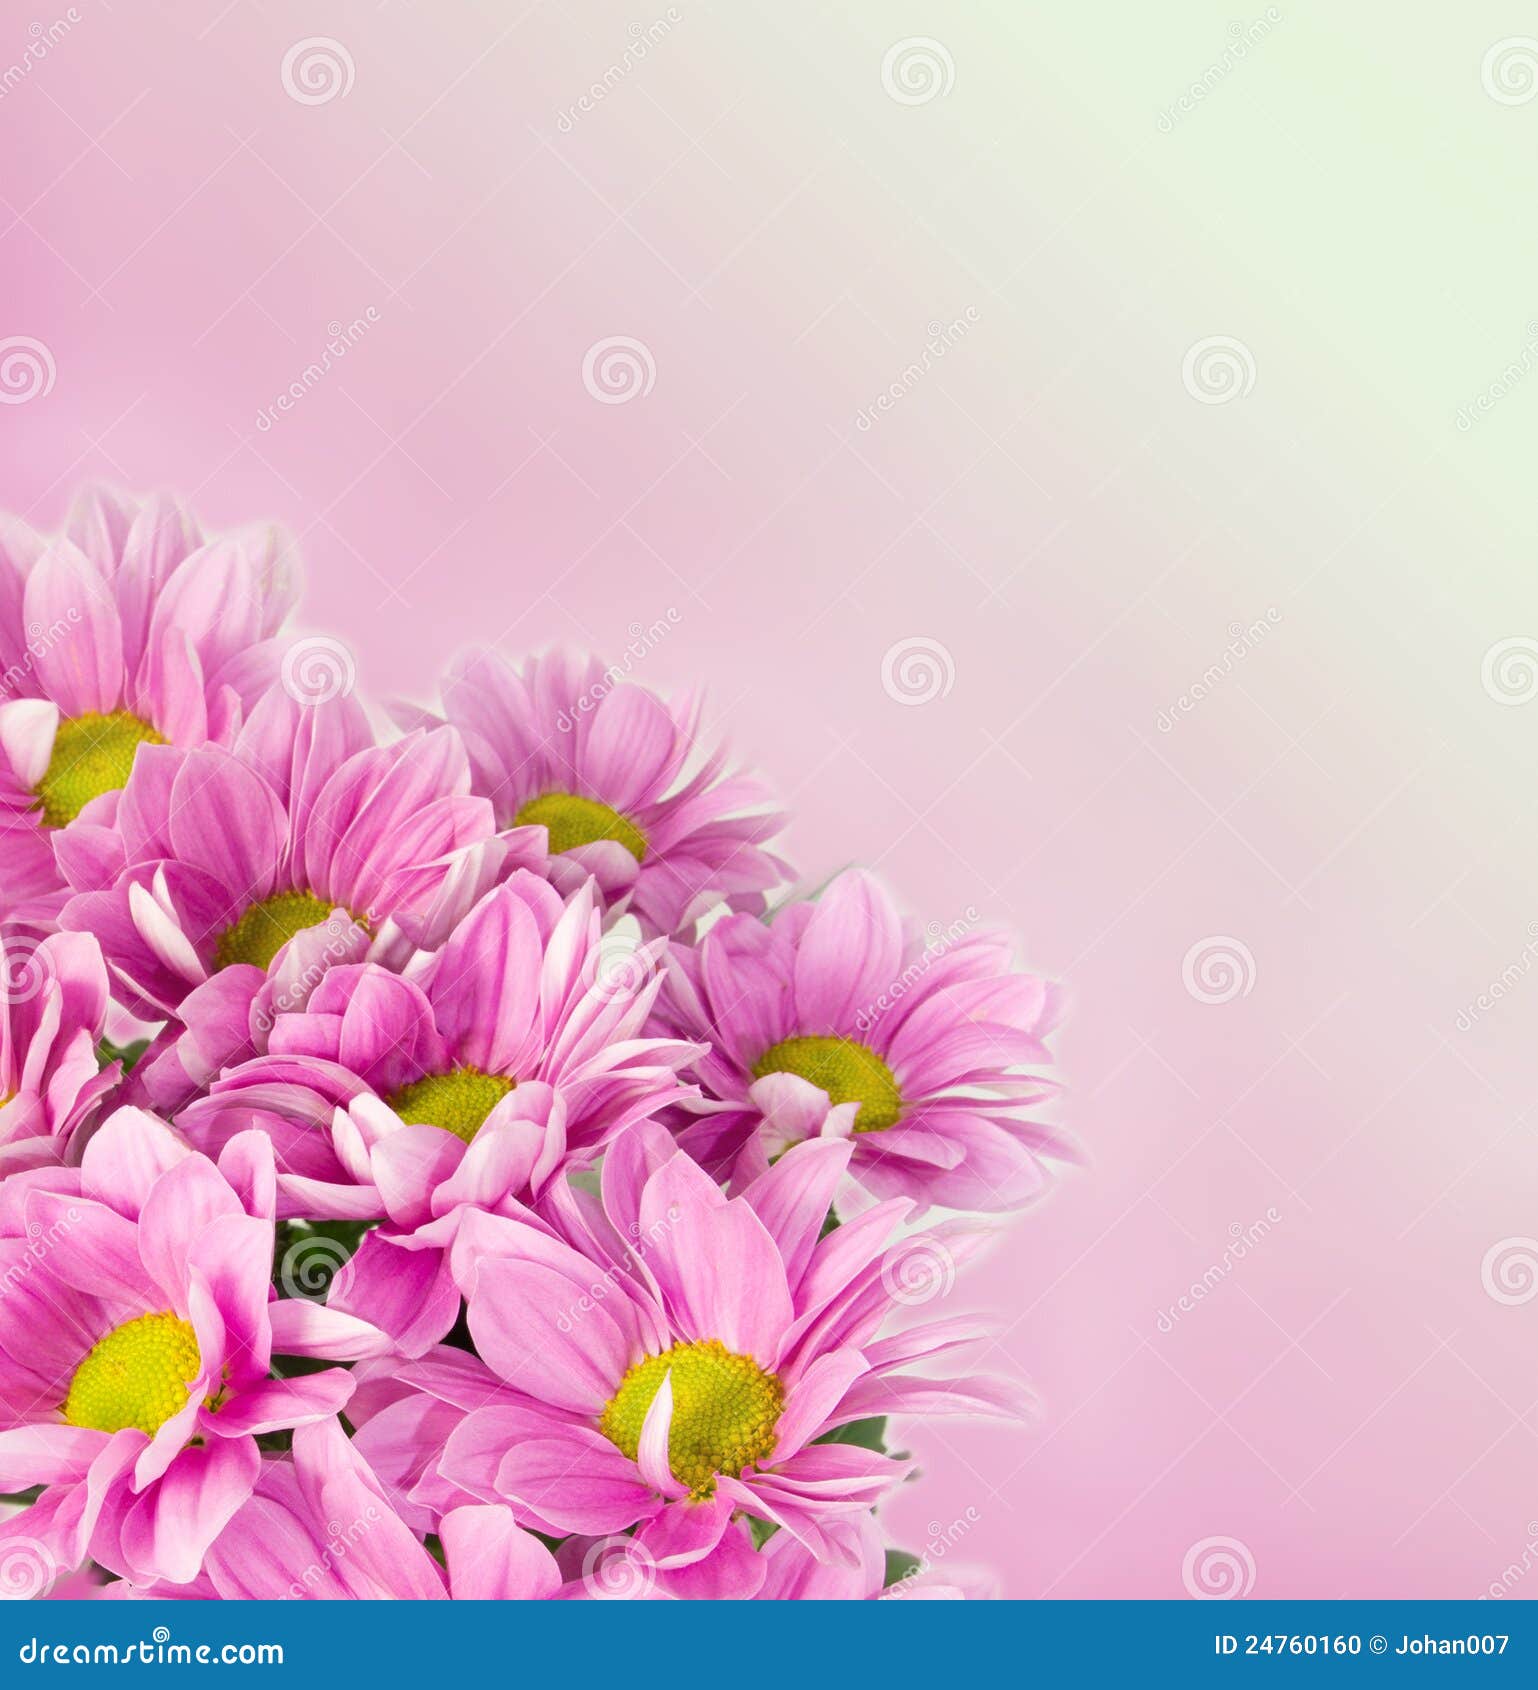 Daisy flowers background stock photo. Image of bright - 24760160